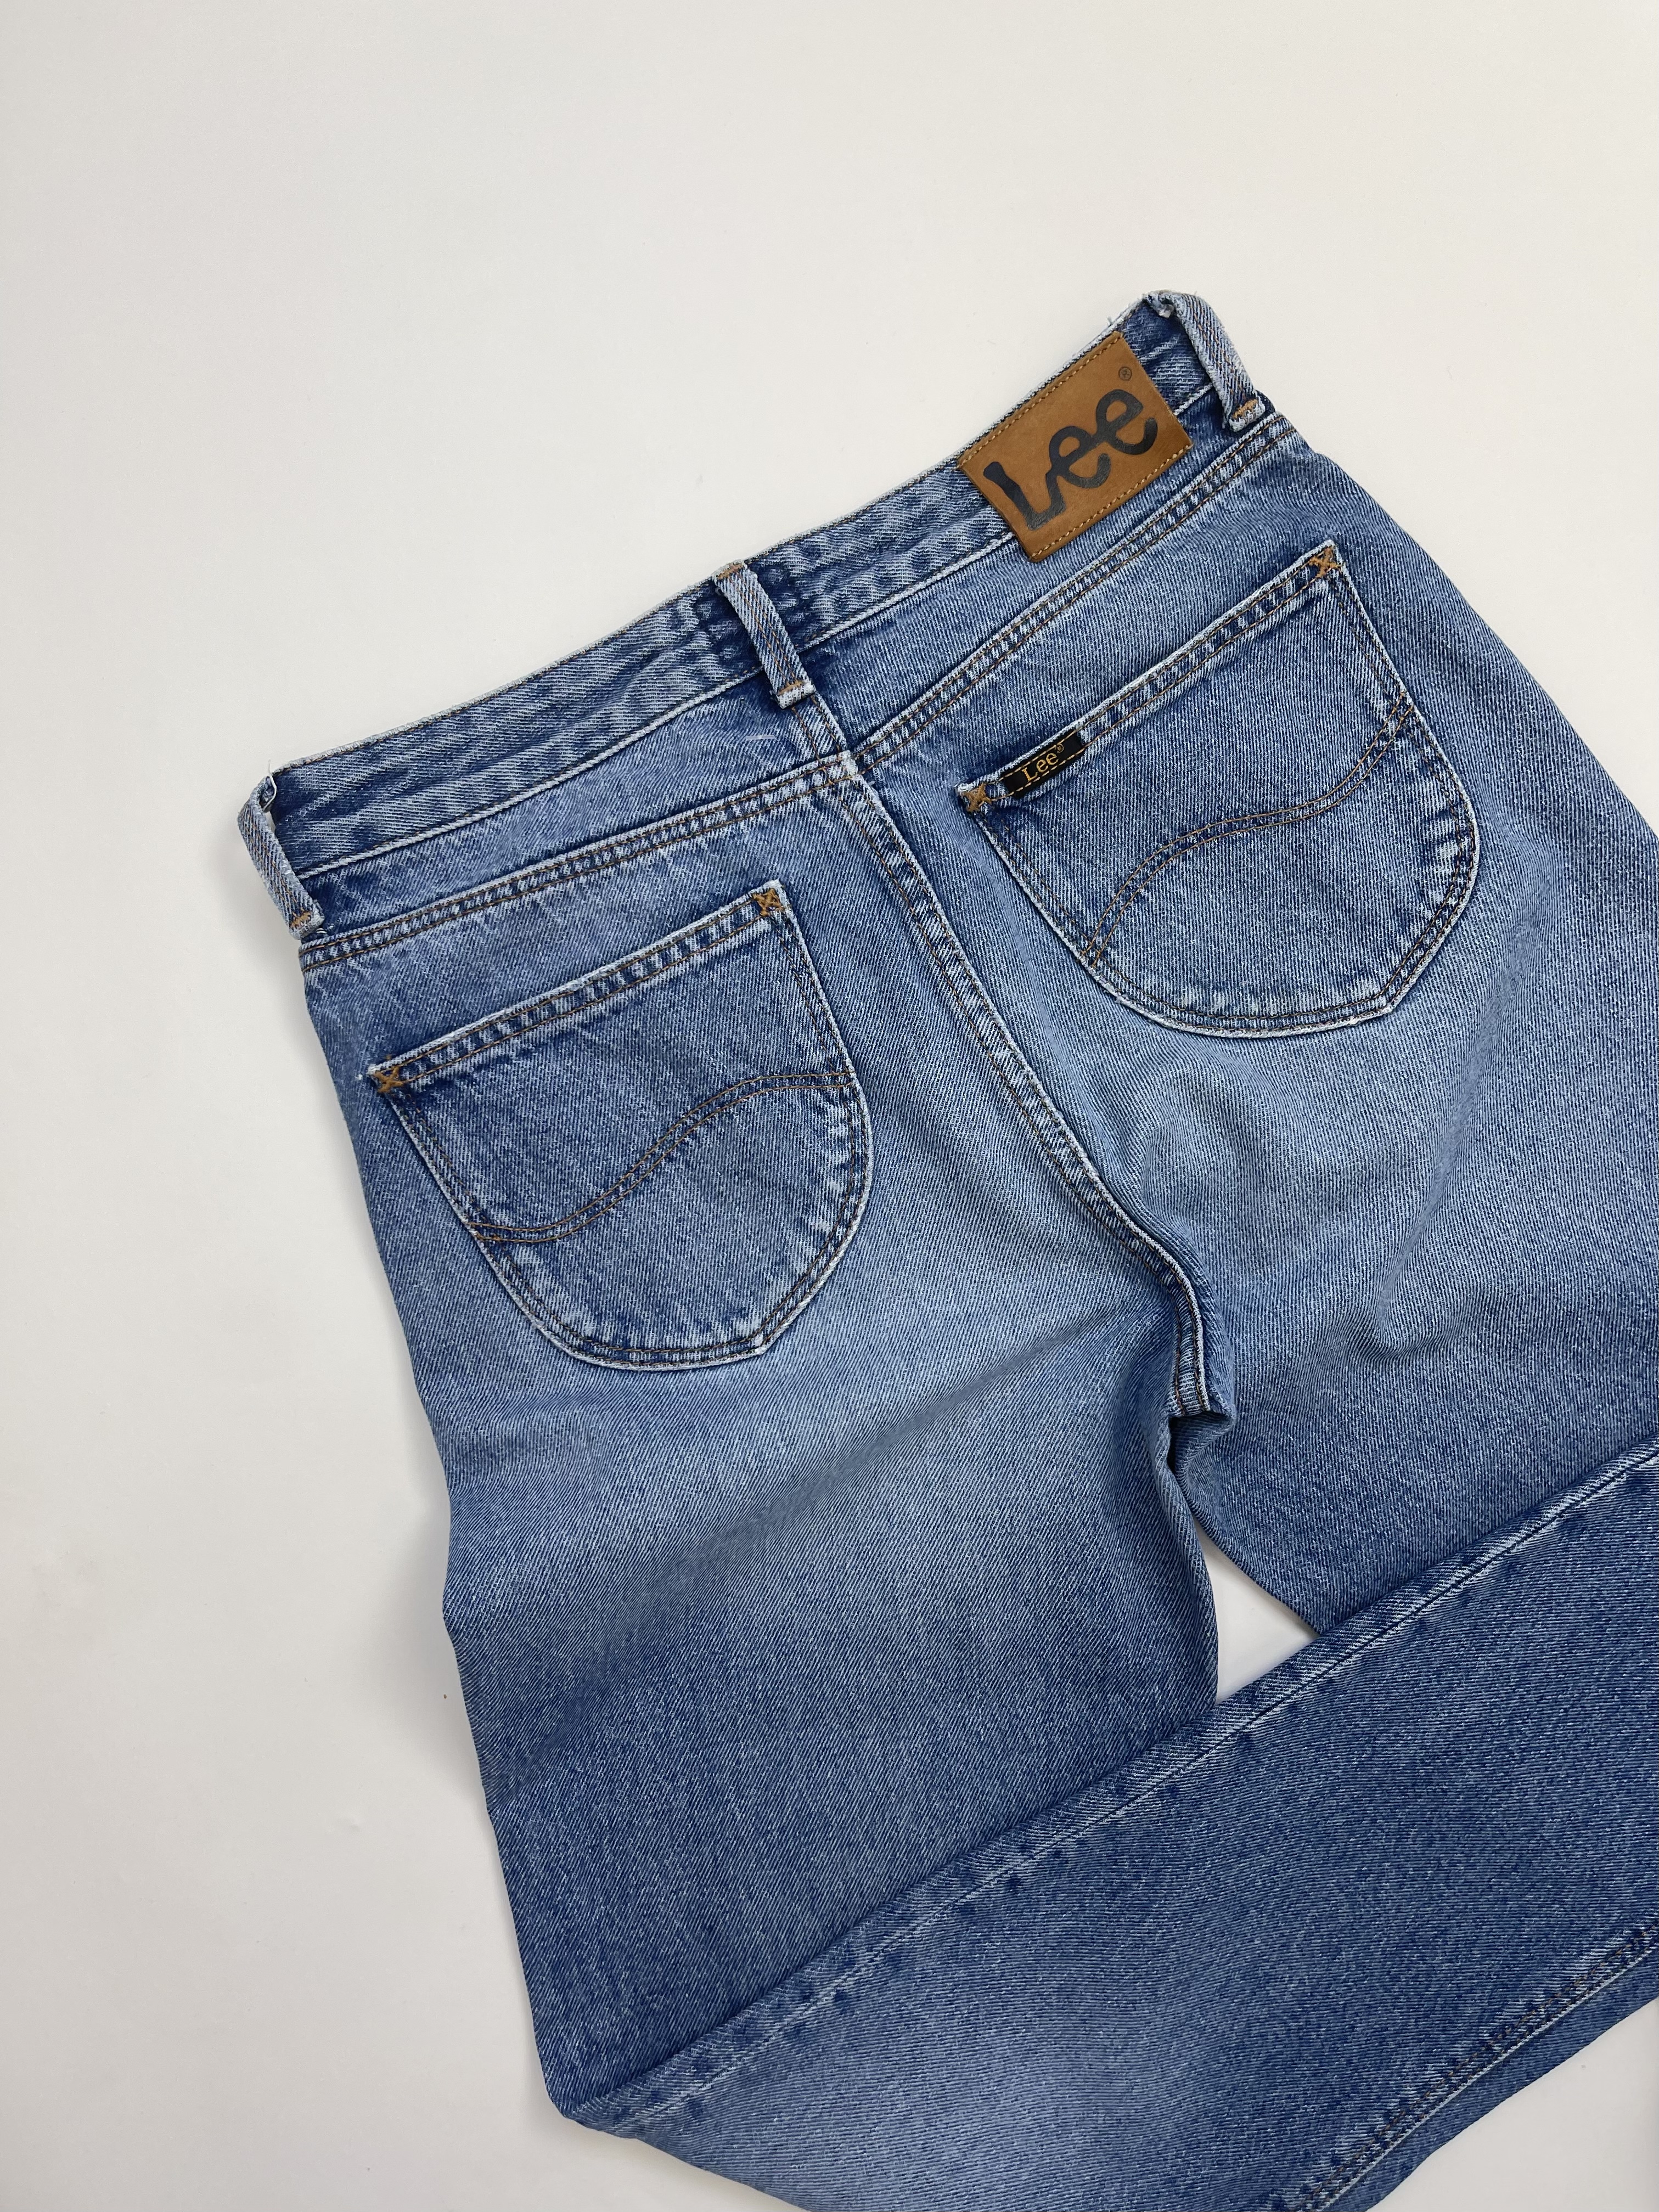 Vintage Lee mum jeans (XS-S)